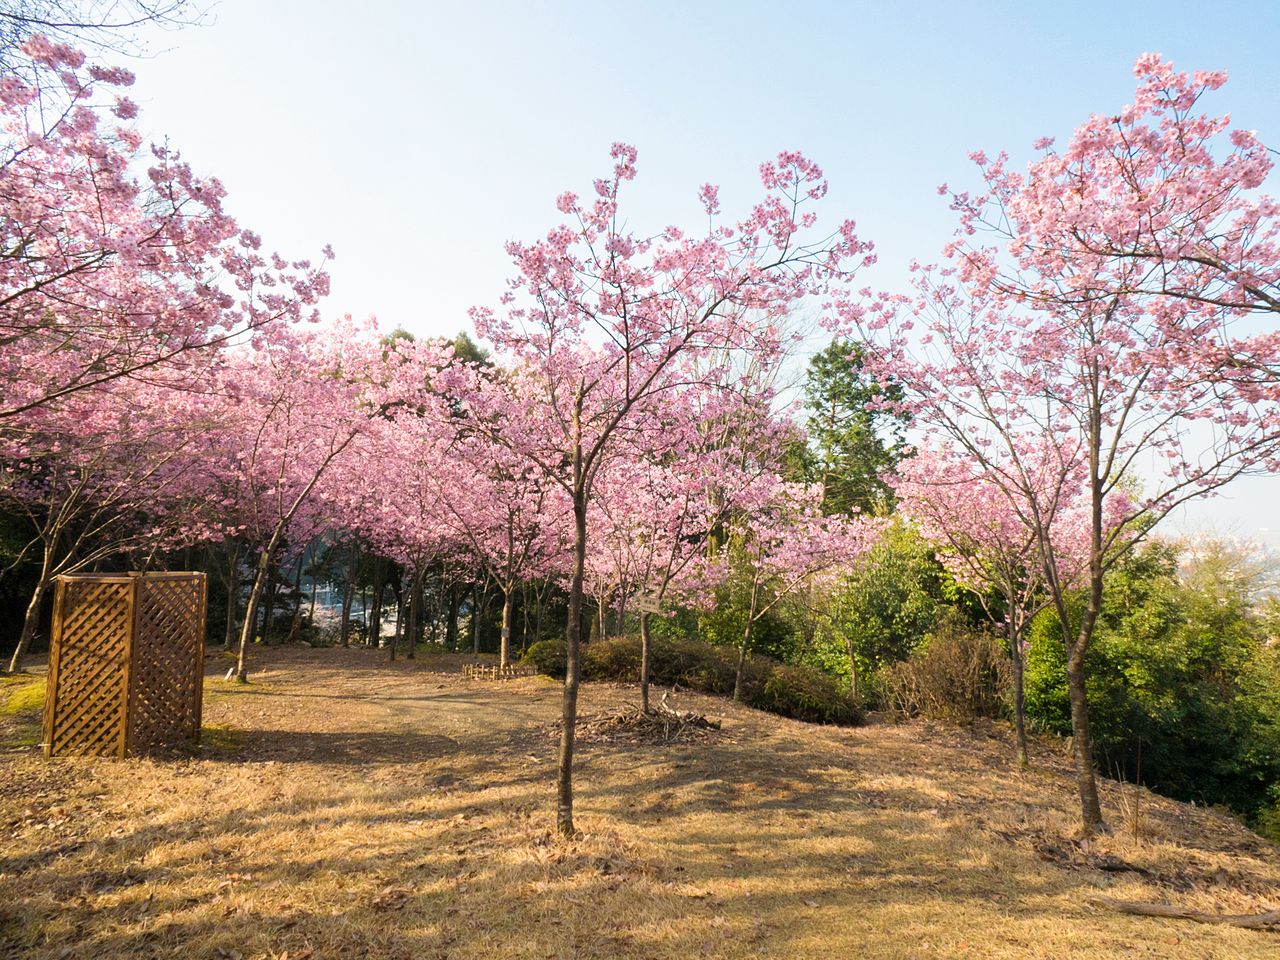 The Ōkaen grove of <em>yōkō</em> cherries covers the hillside in pink glory. 